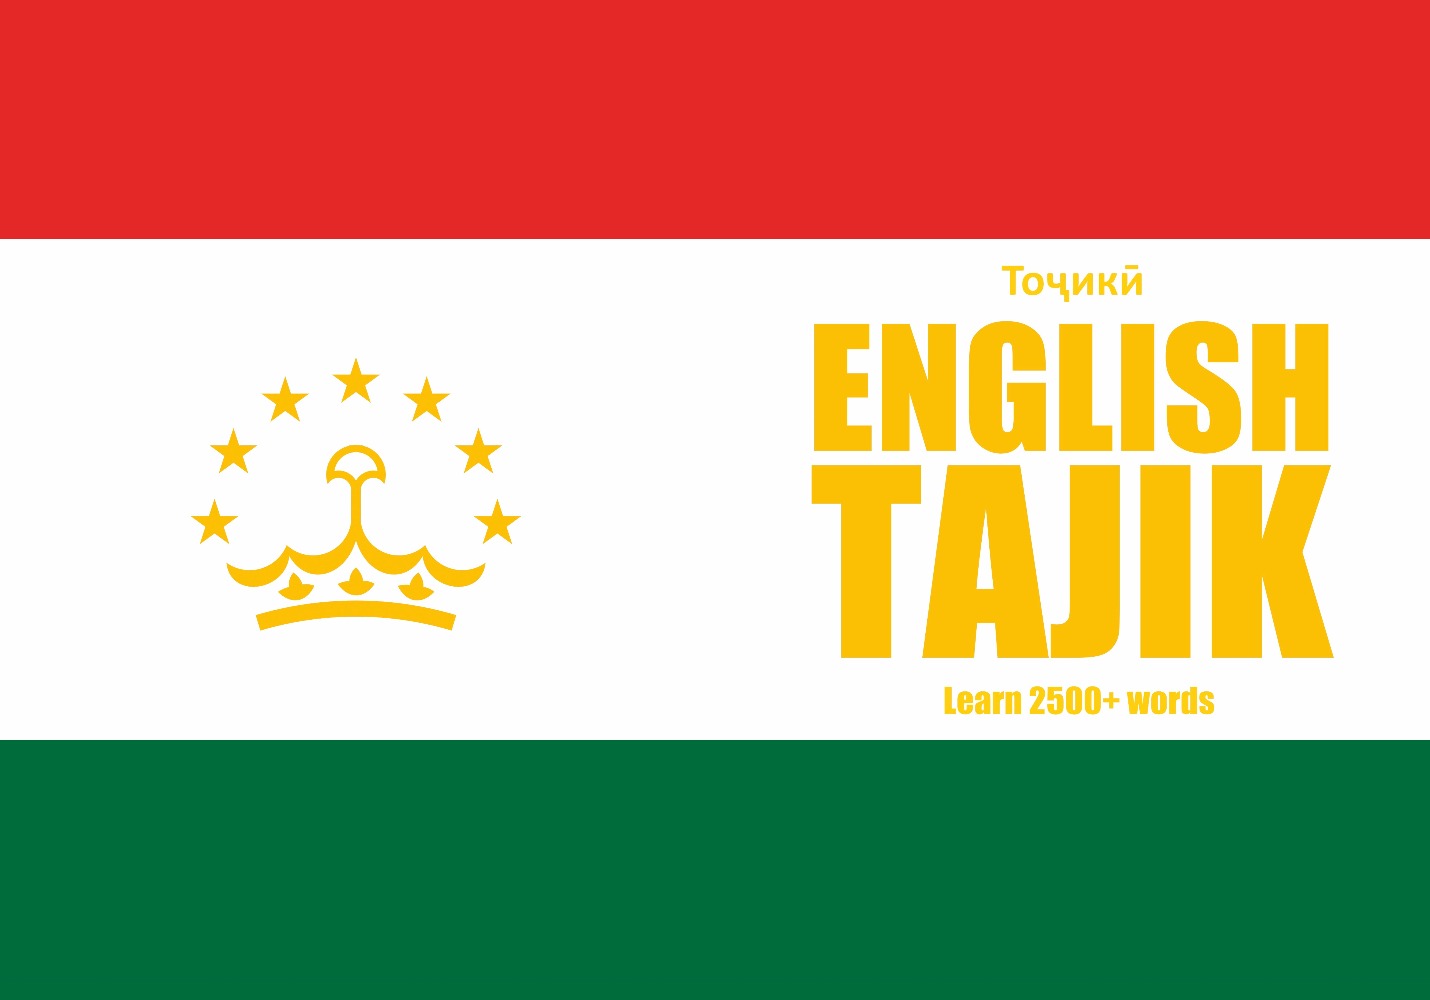 Tajik language learning notebook cover